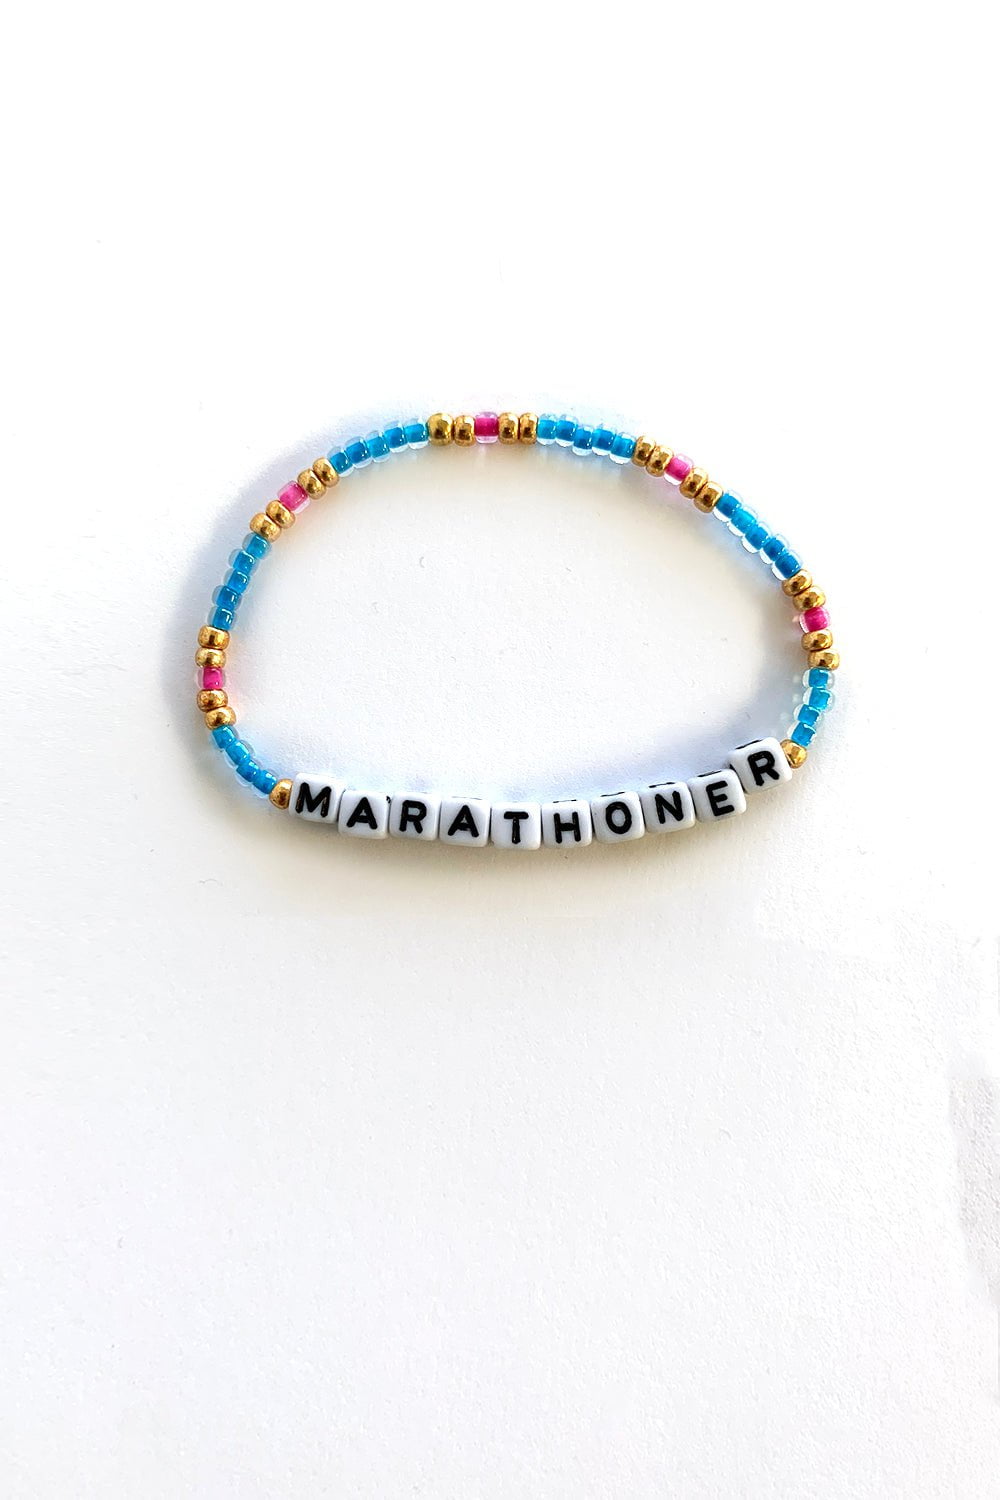 Sarah Marie Design Studio Bracelet Marathoner Disney Bracelet